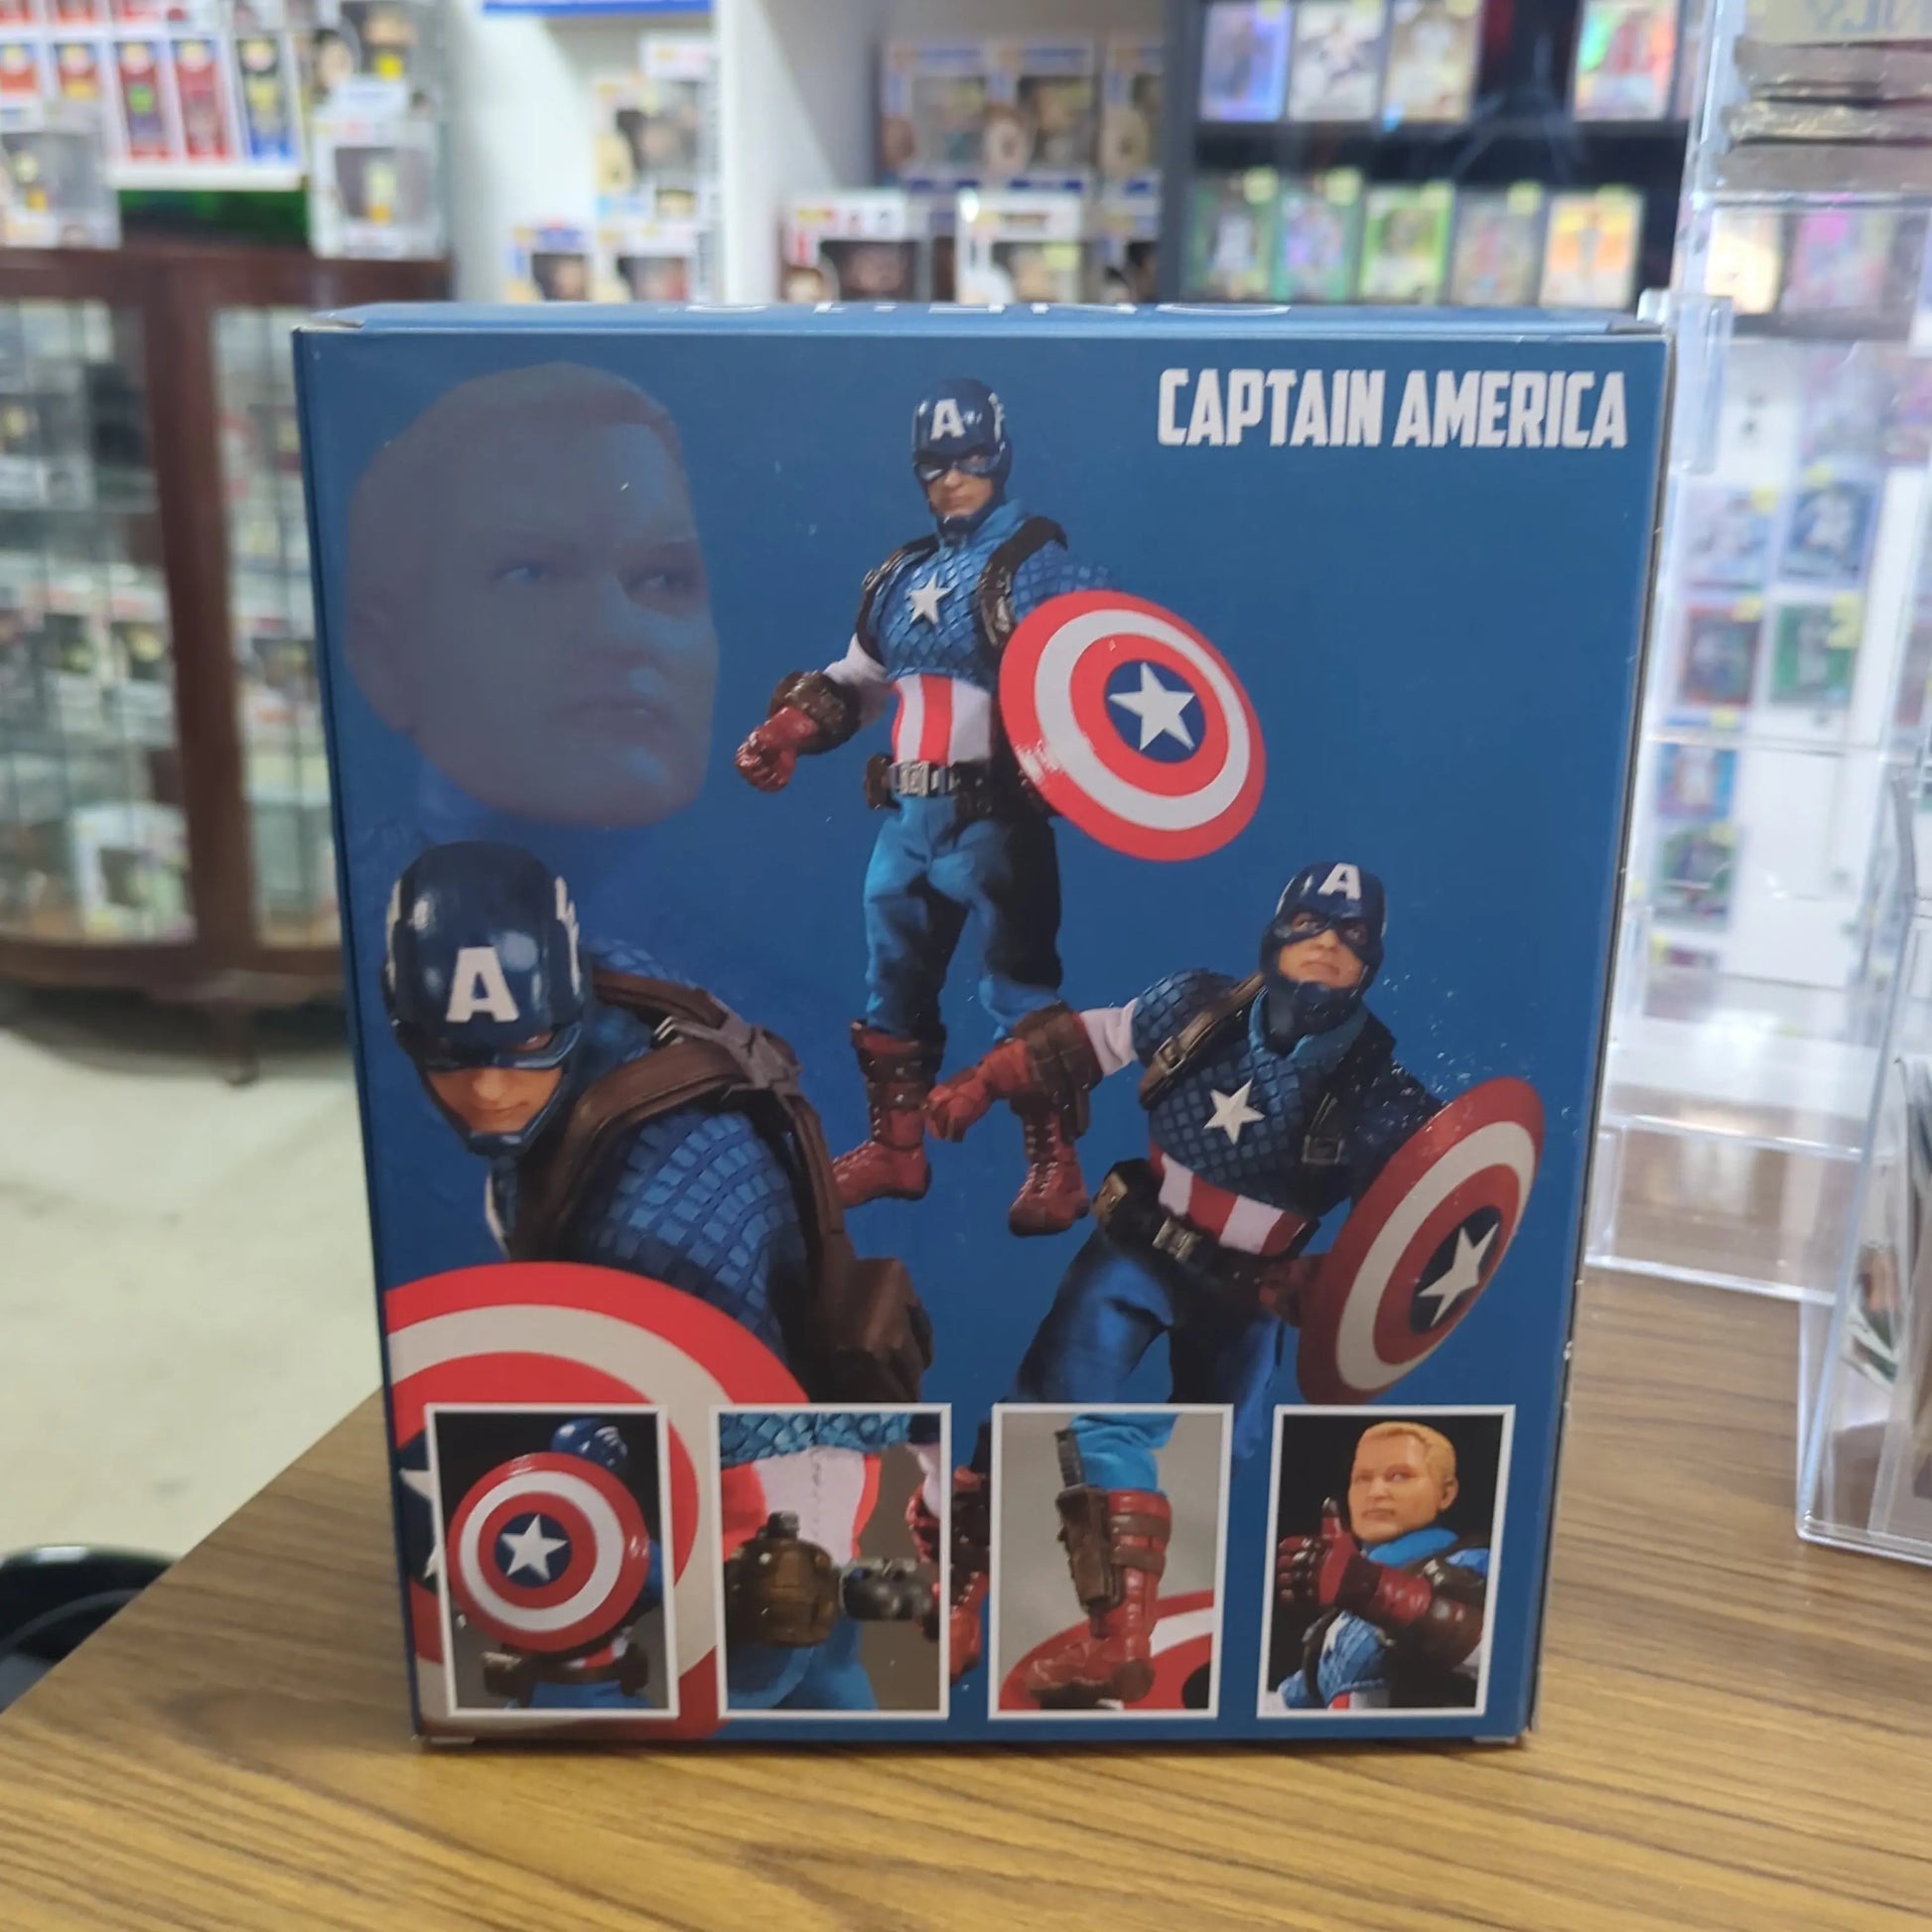 Mezco One:12 Collective Captain America Marvel Universe Avengers FRENLY BRICKS - Open 7 Days